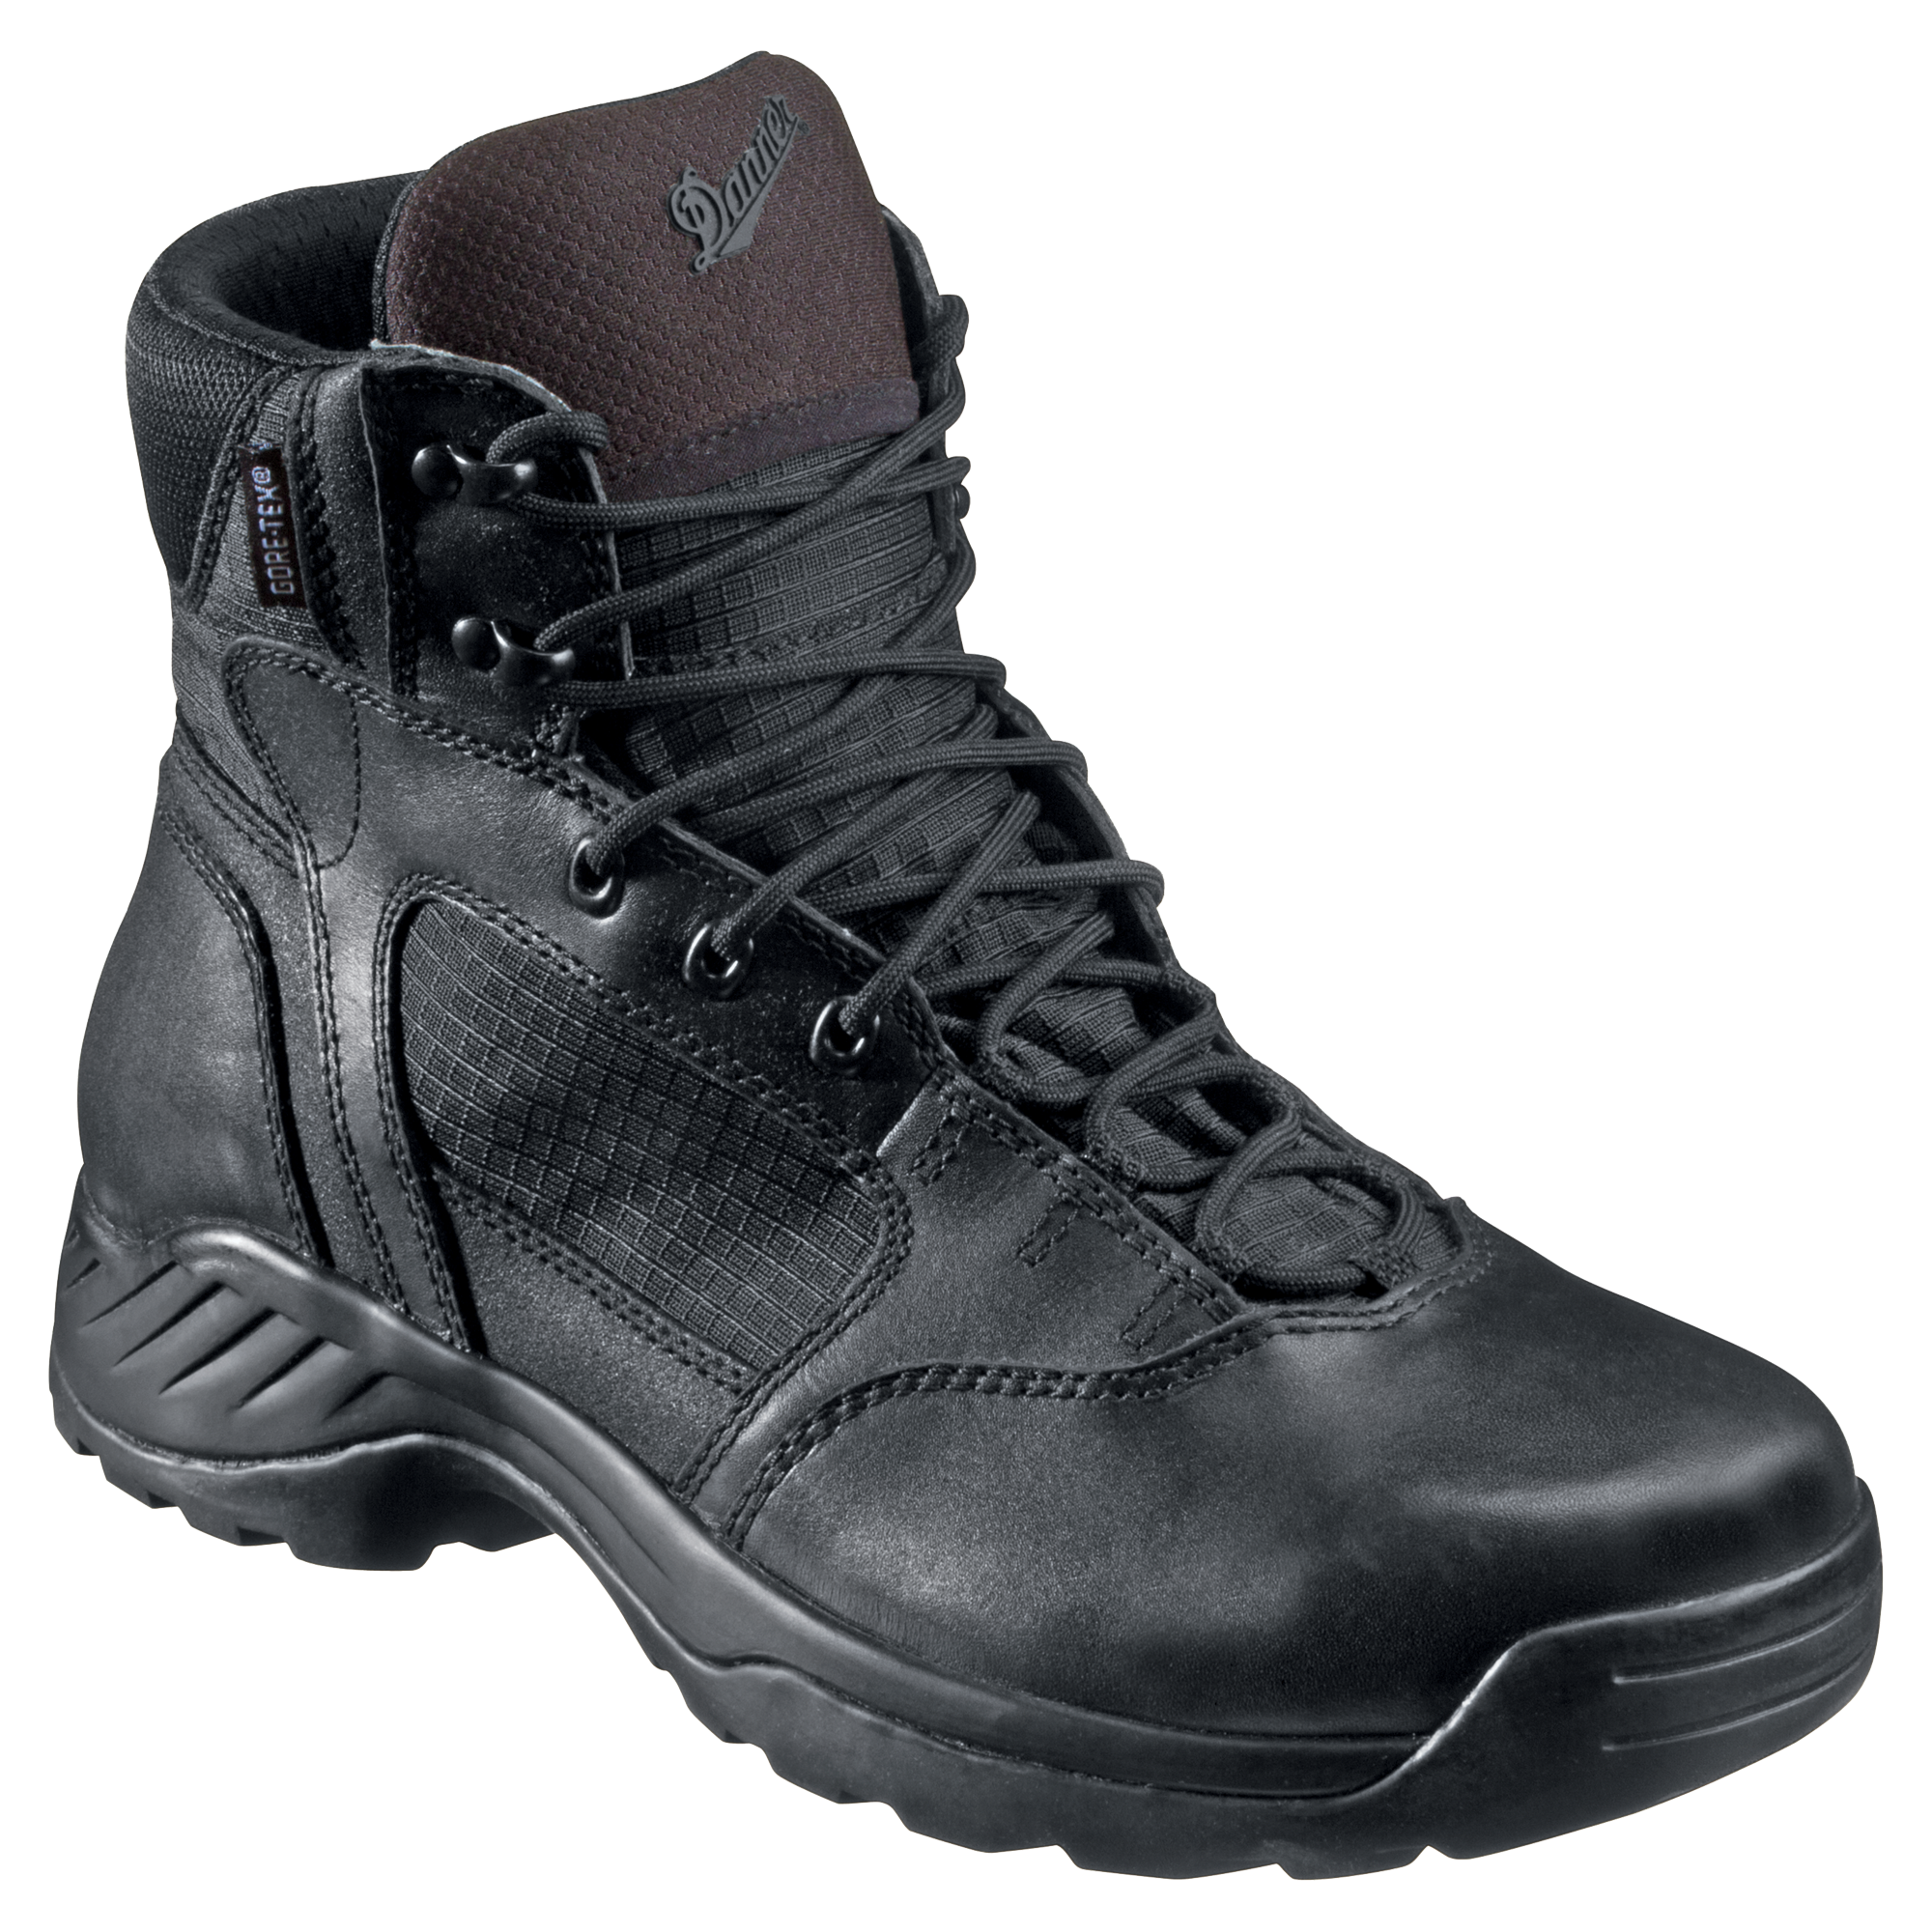 Danner Kinetic Side-Zip GORE-TEX Work Boots for Men - Black - 7M